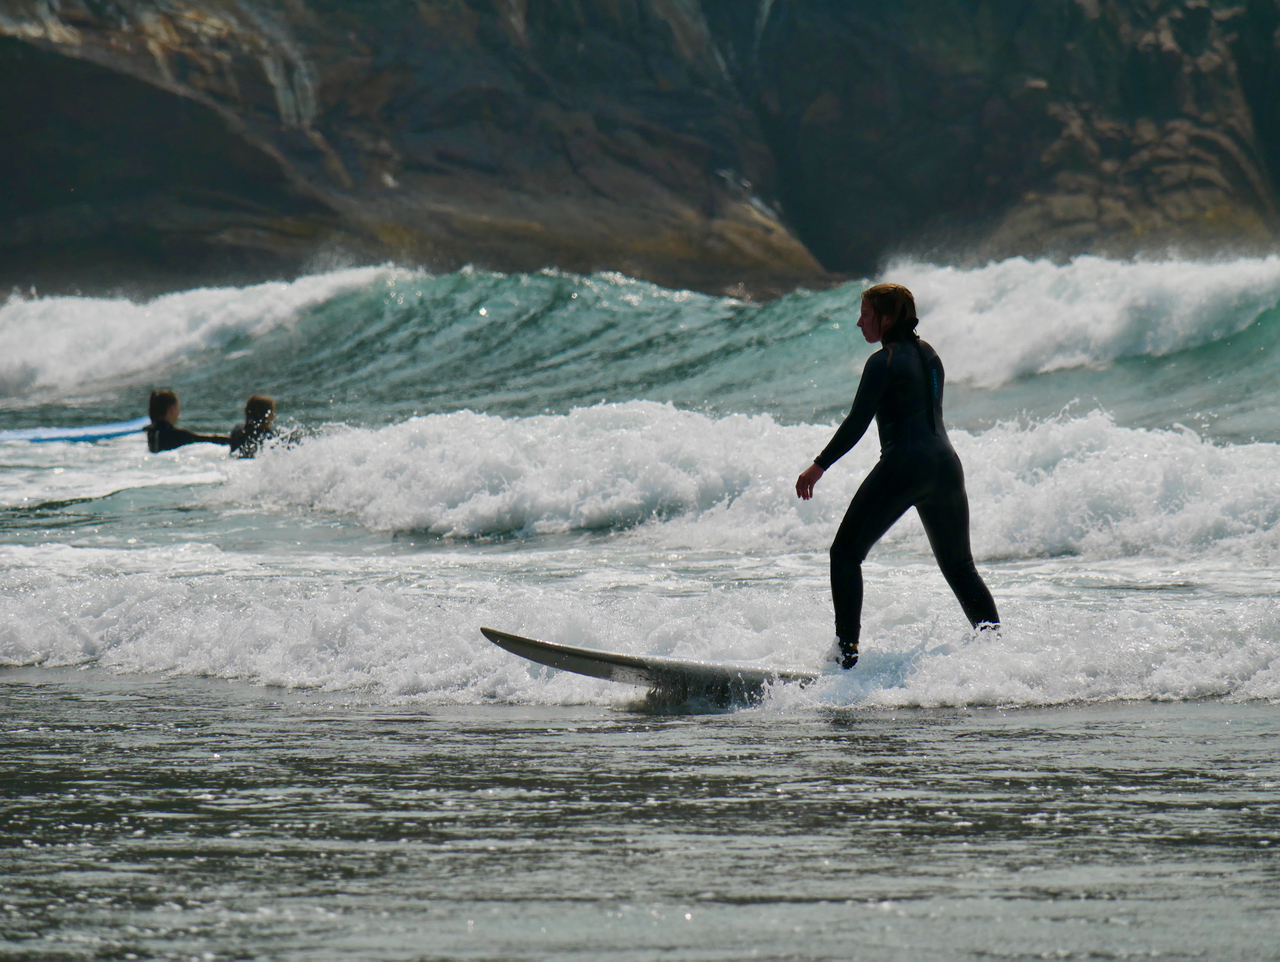 A woman surfs at the Oregon coast